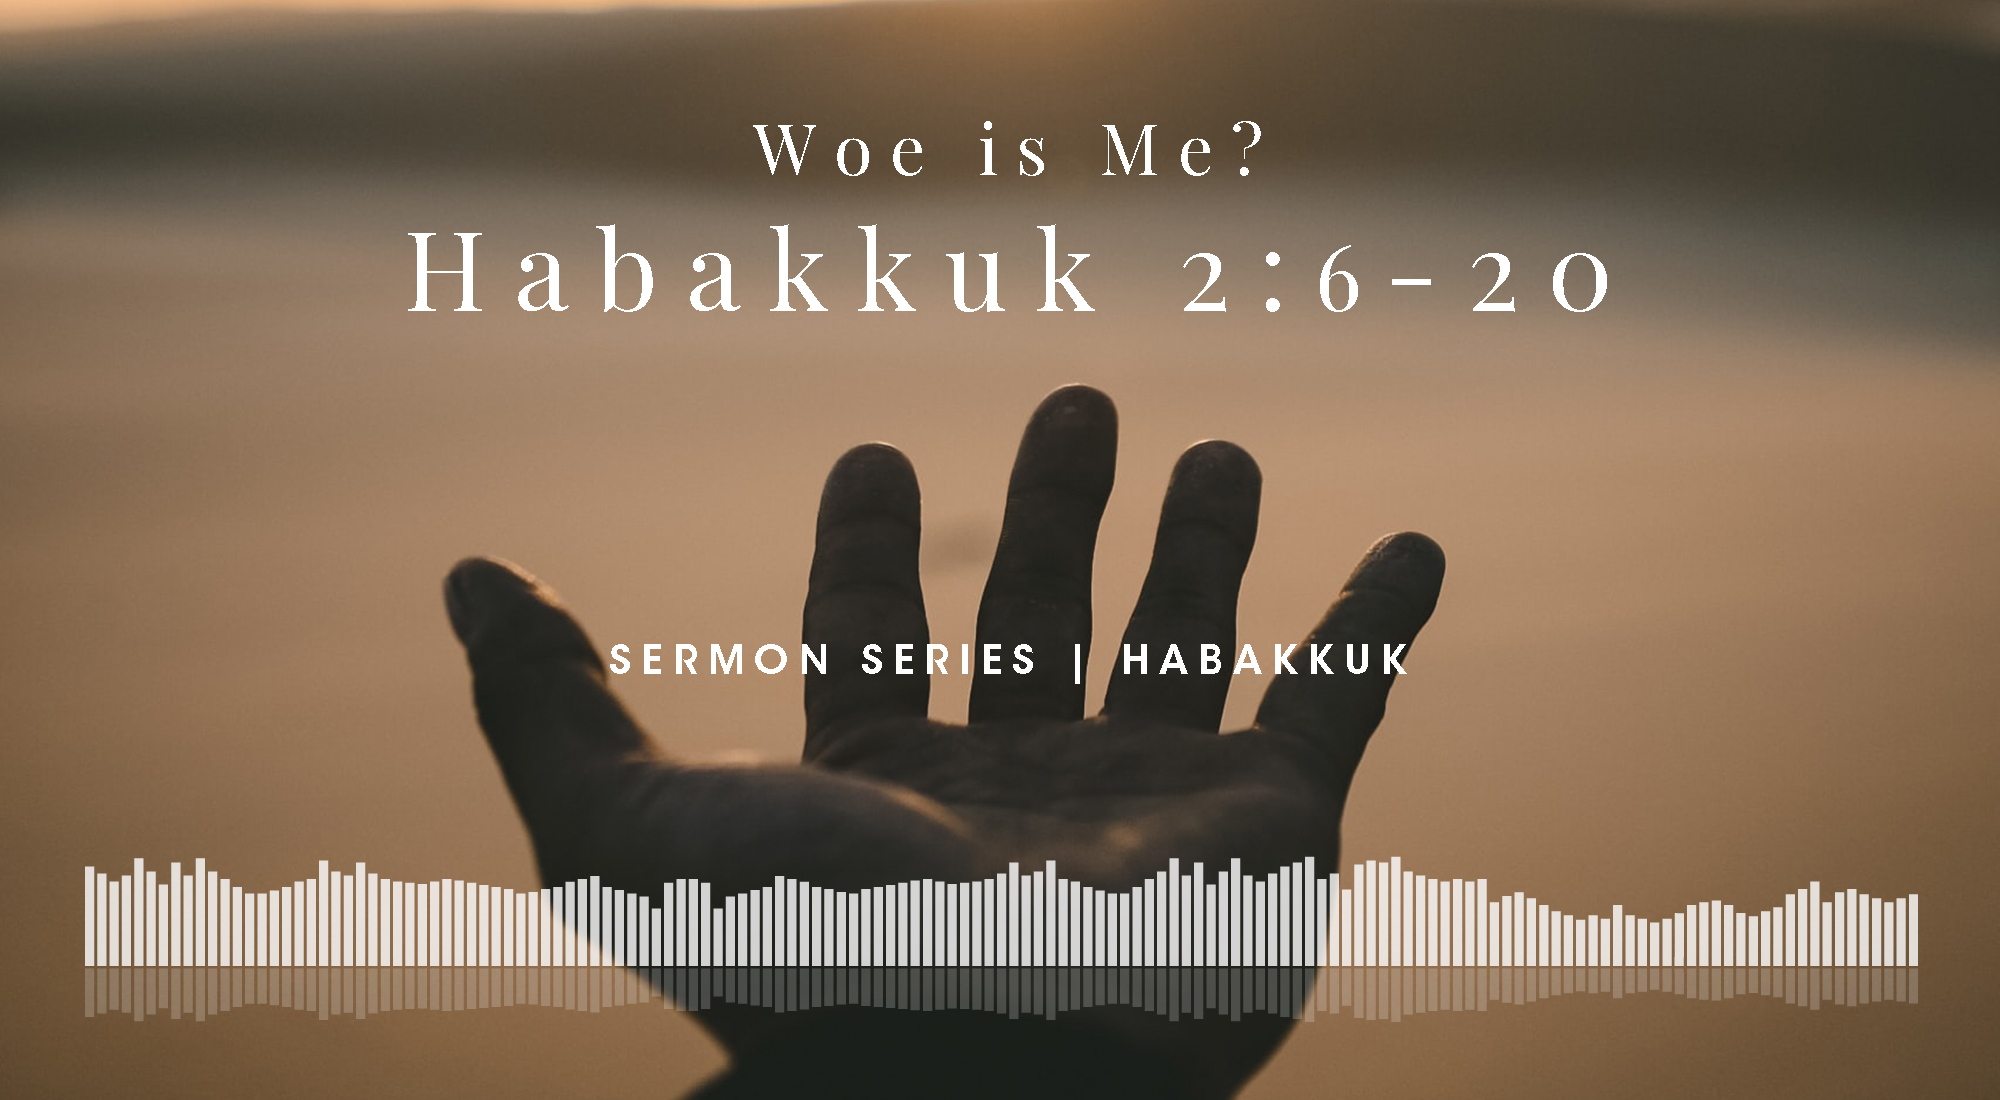 Woe Is Me? Habakkuk 2:6-20, From Our Habakkuk Sermon Series, Wyandotte County Christian Church